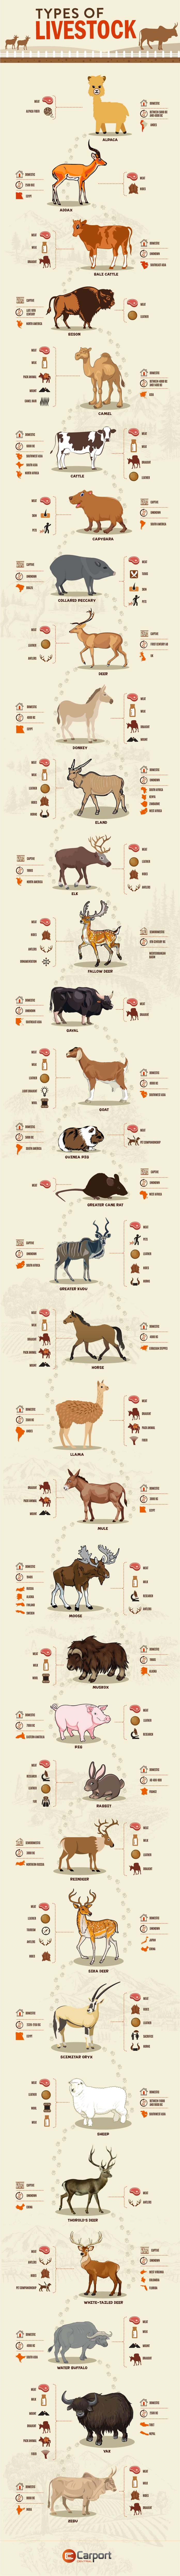 Types of Livestock - Carport Central